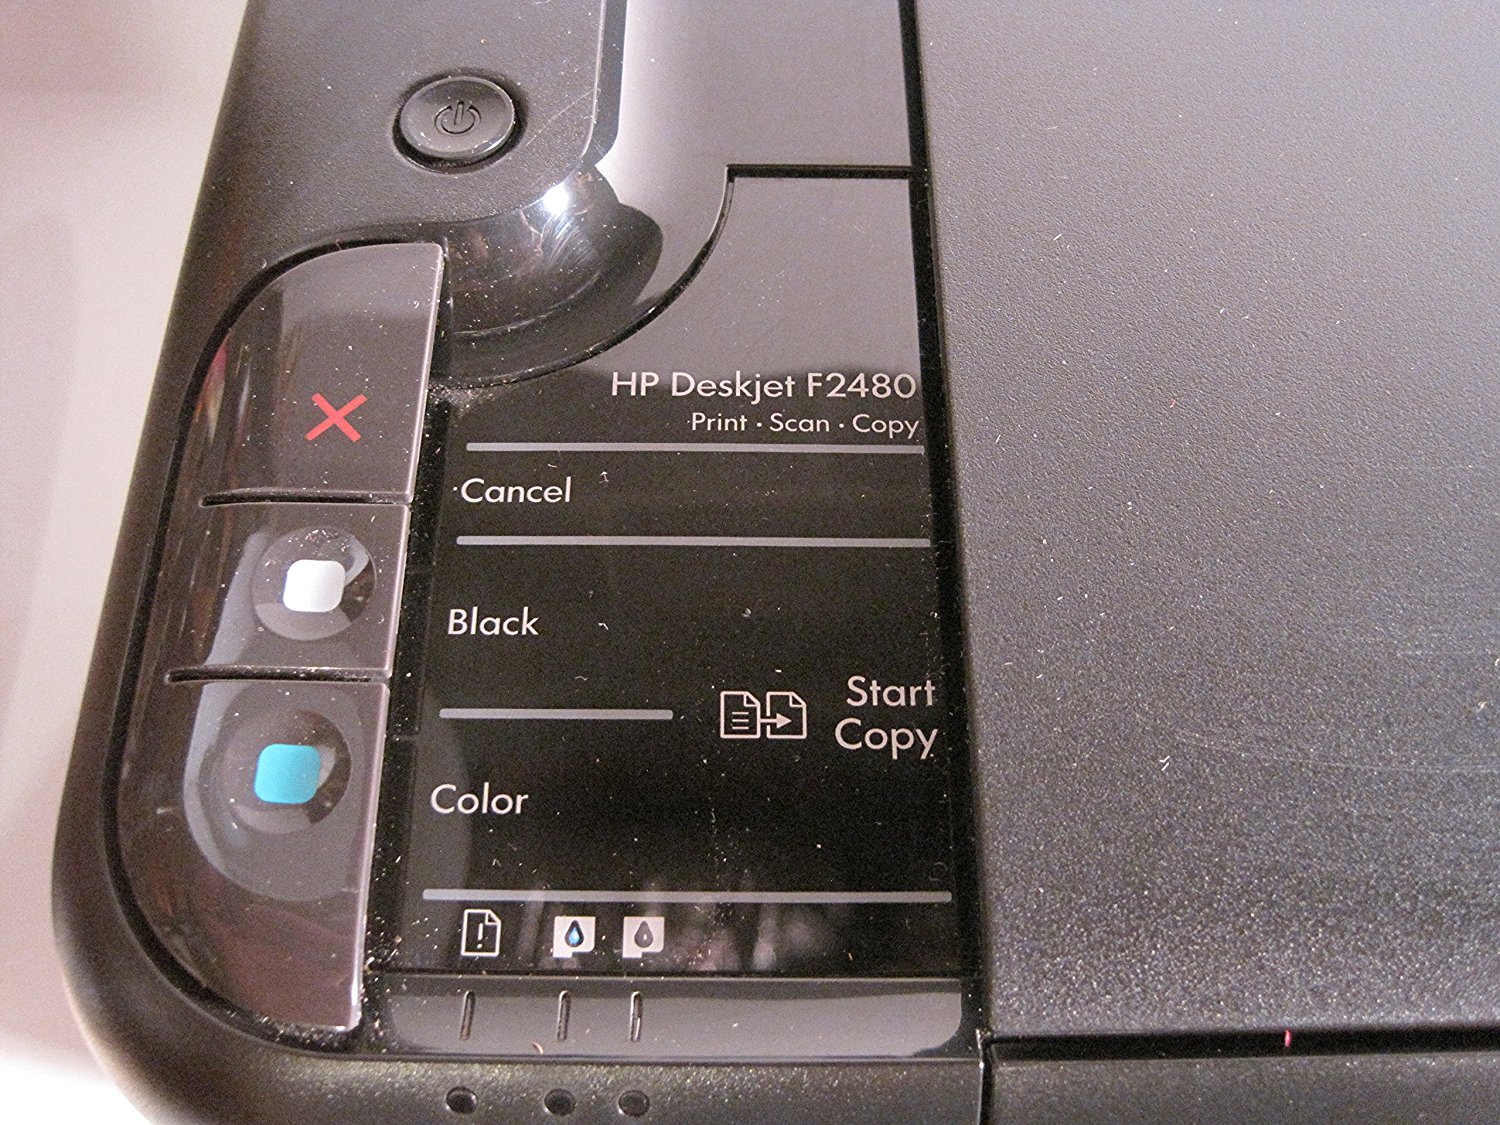 Hp Deskjet Computer Printer F2480 All In One Printcopyscan N3 Free Image Download 2311